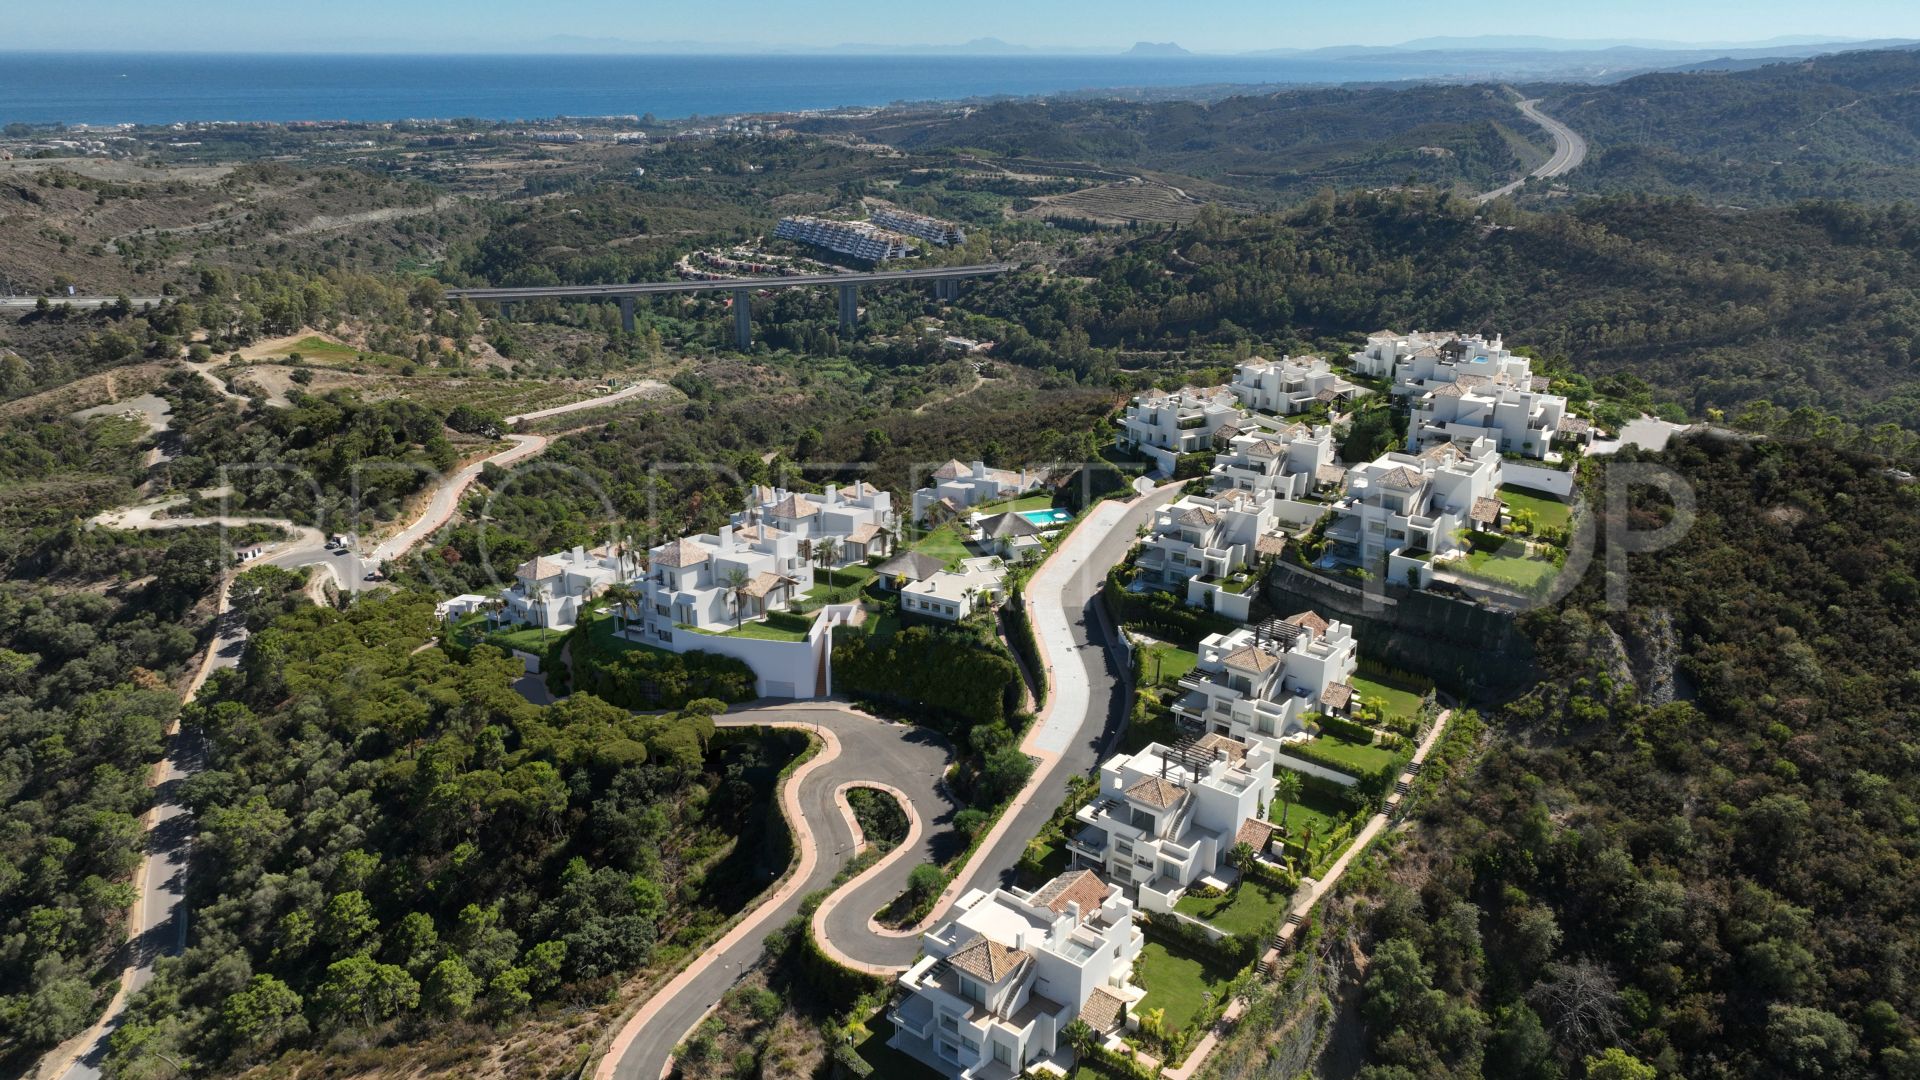 Marbella Club Hills duplex penthouse for sale